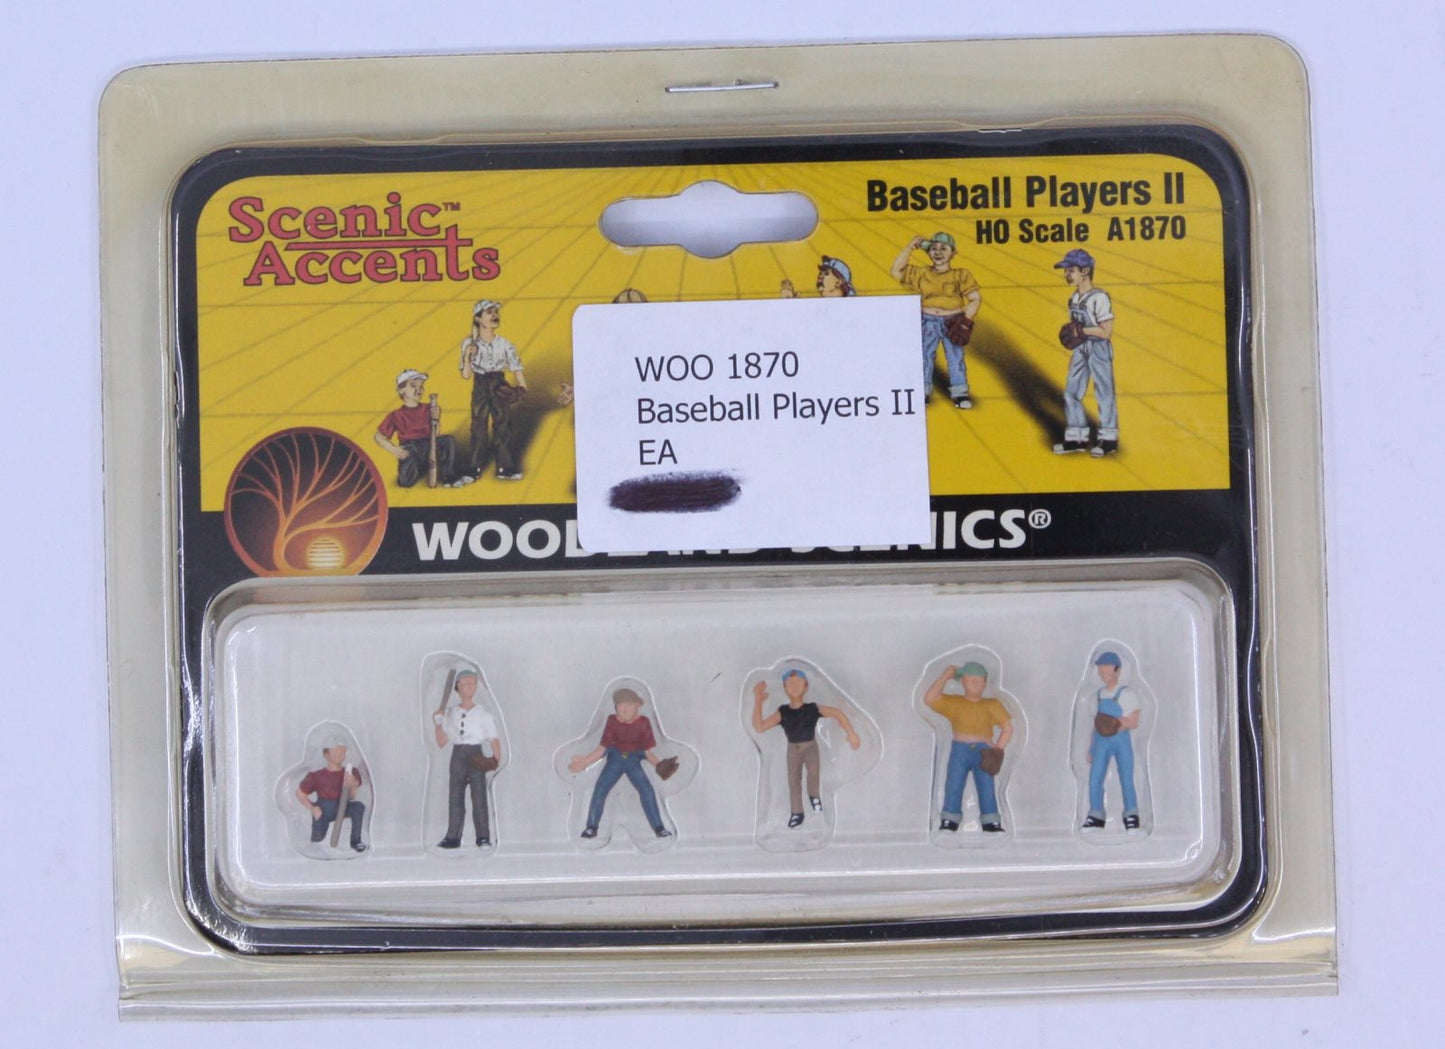 Woodland Scenics A1870 HO Scenic Accents Baseball Players II Figures (Set of 6)